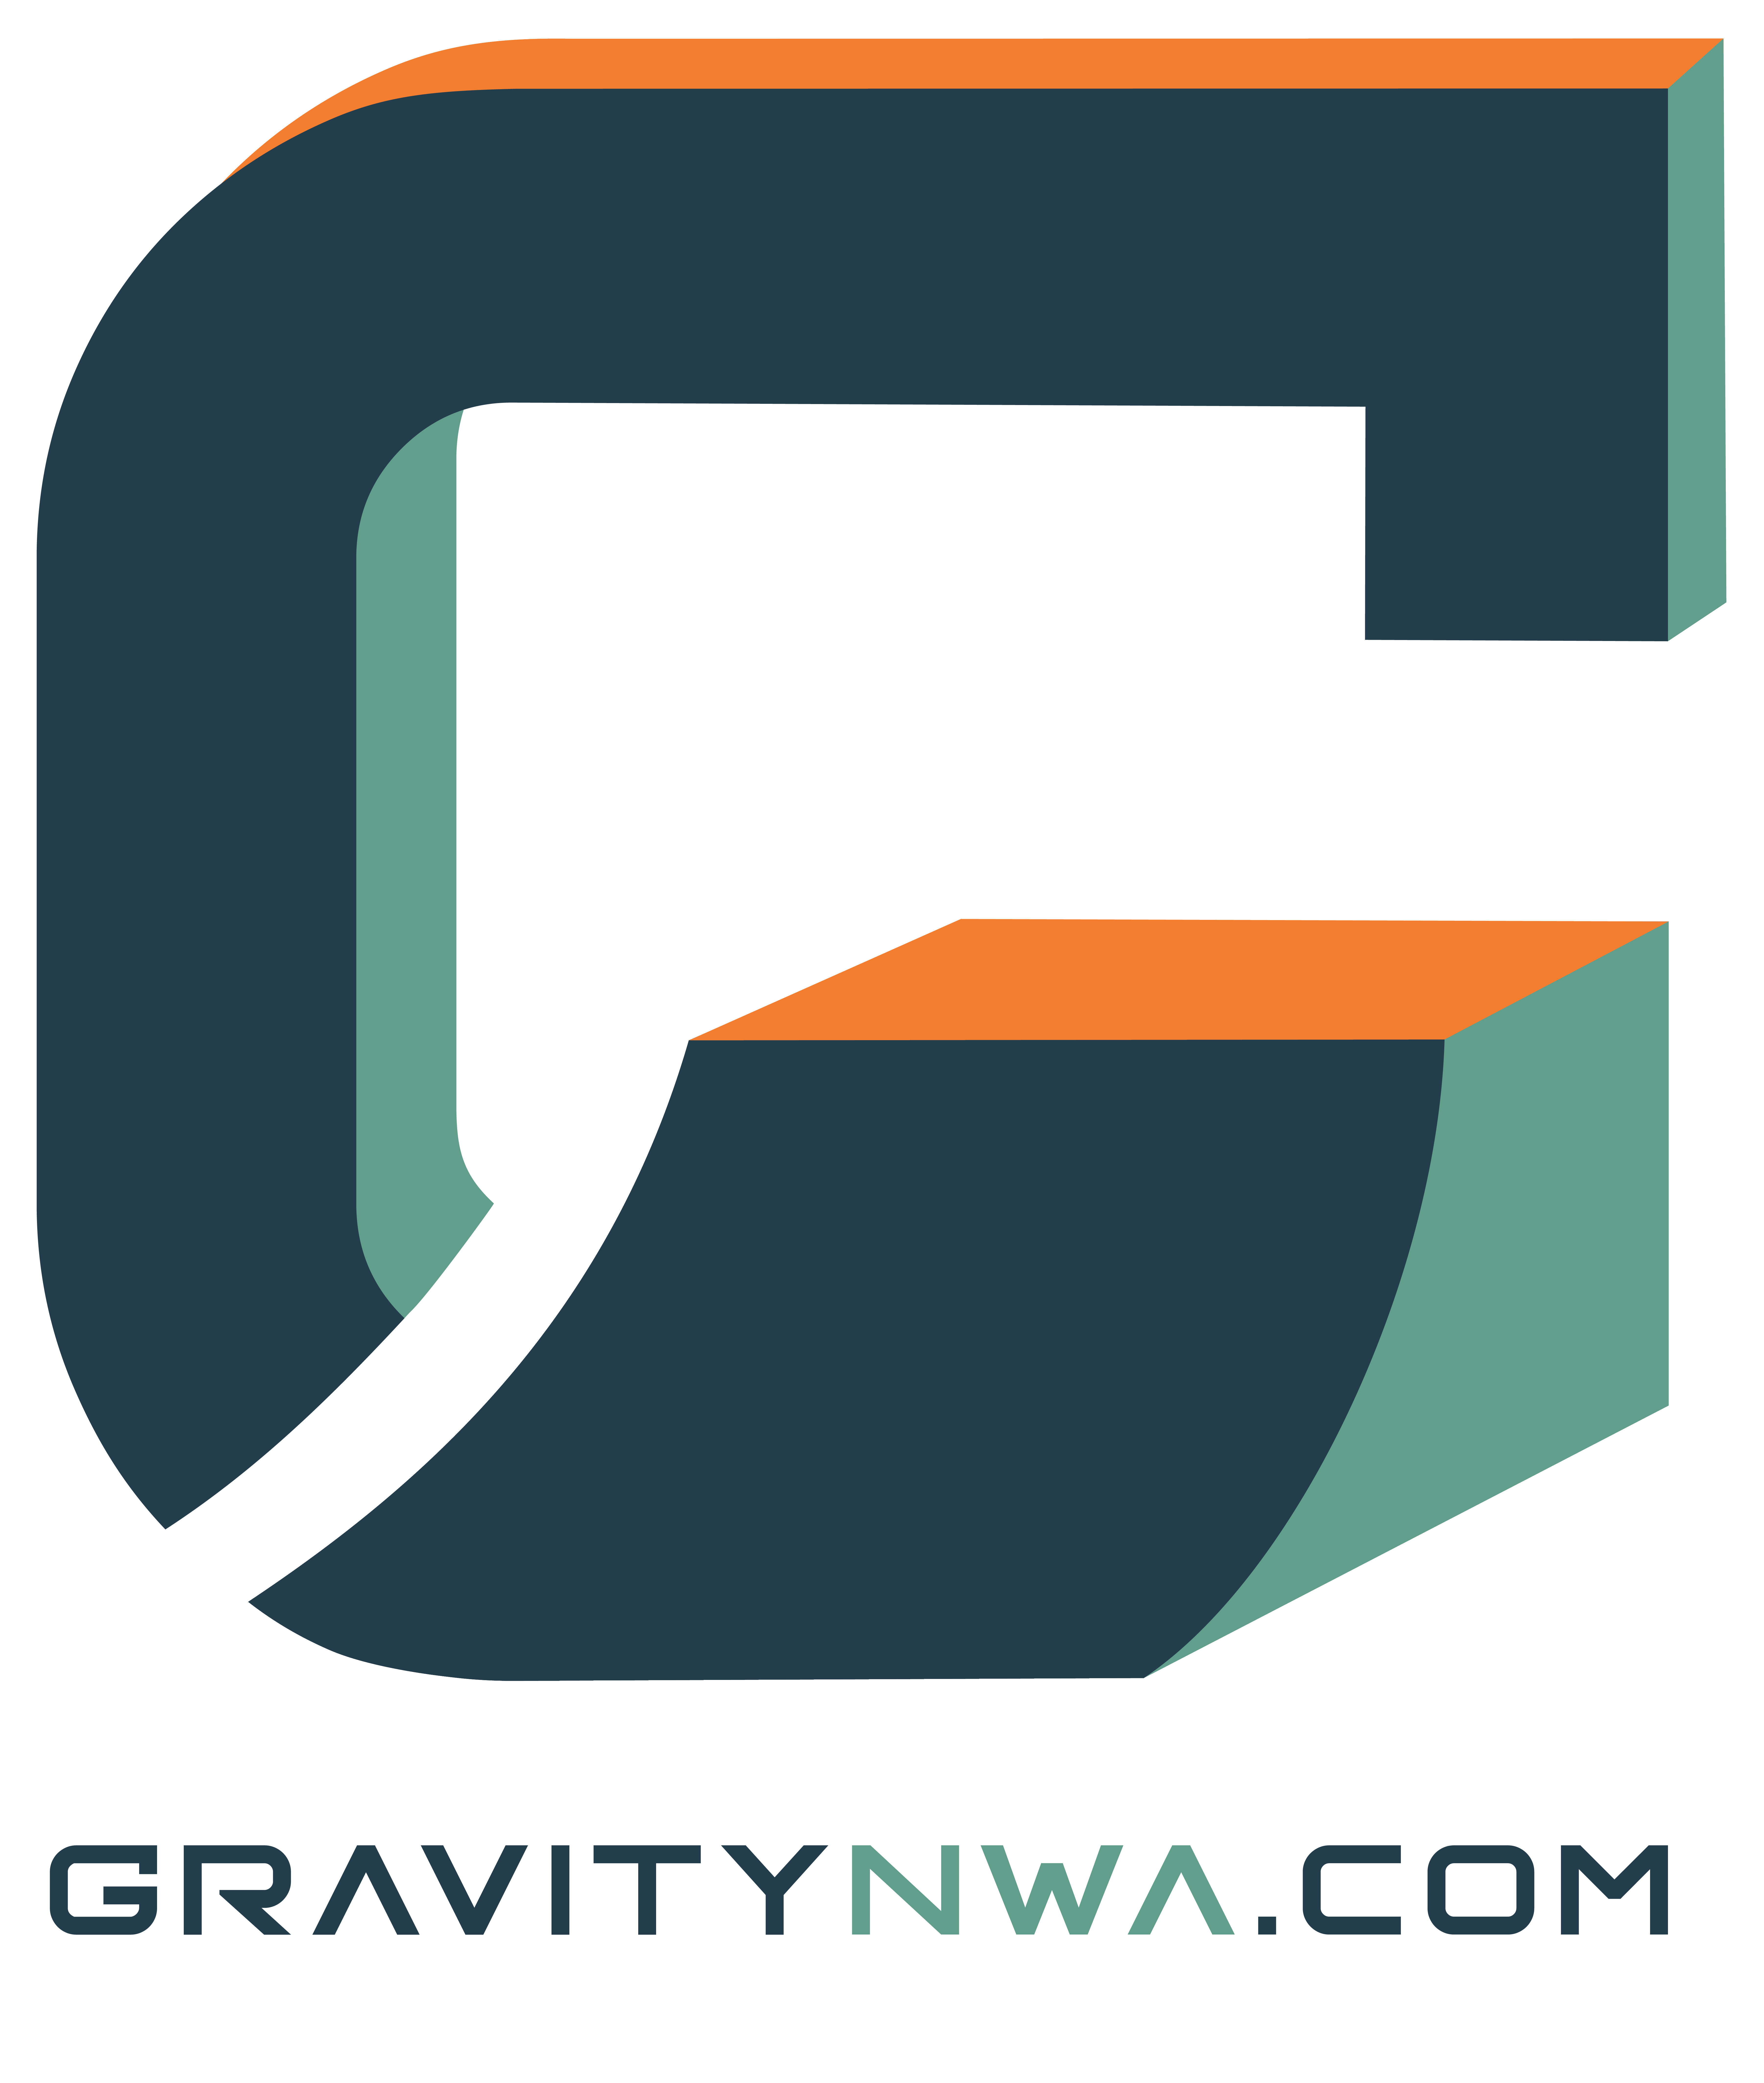 Gravitynwa.com logo in dark blue, green, and orange.